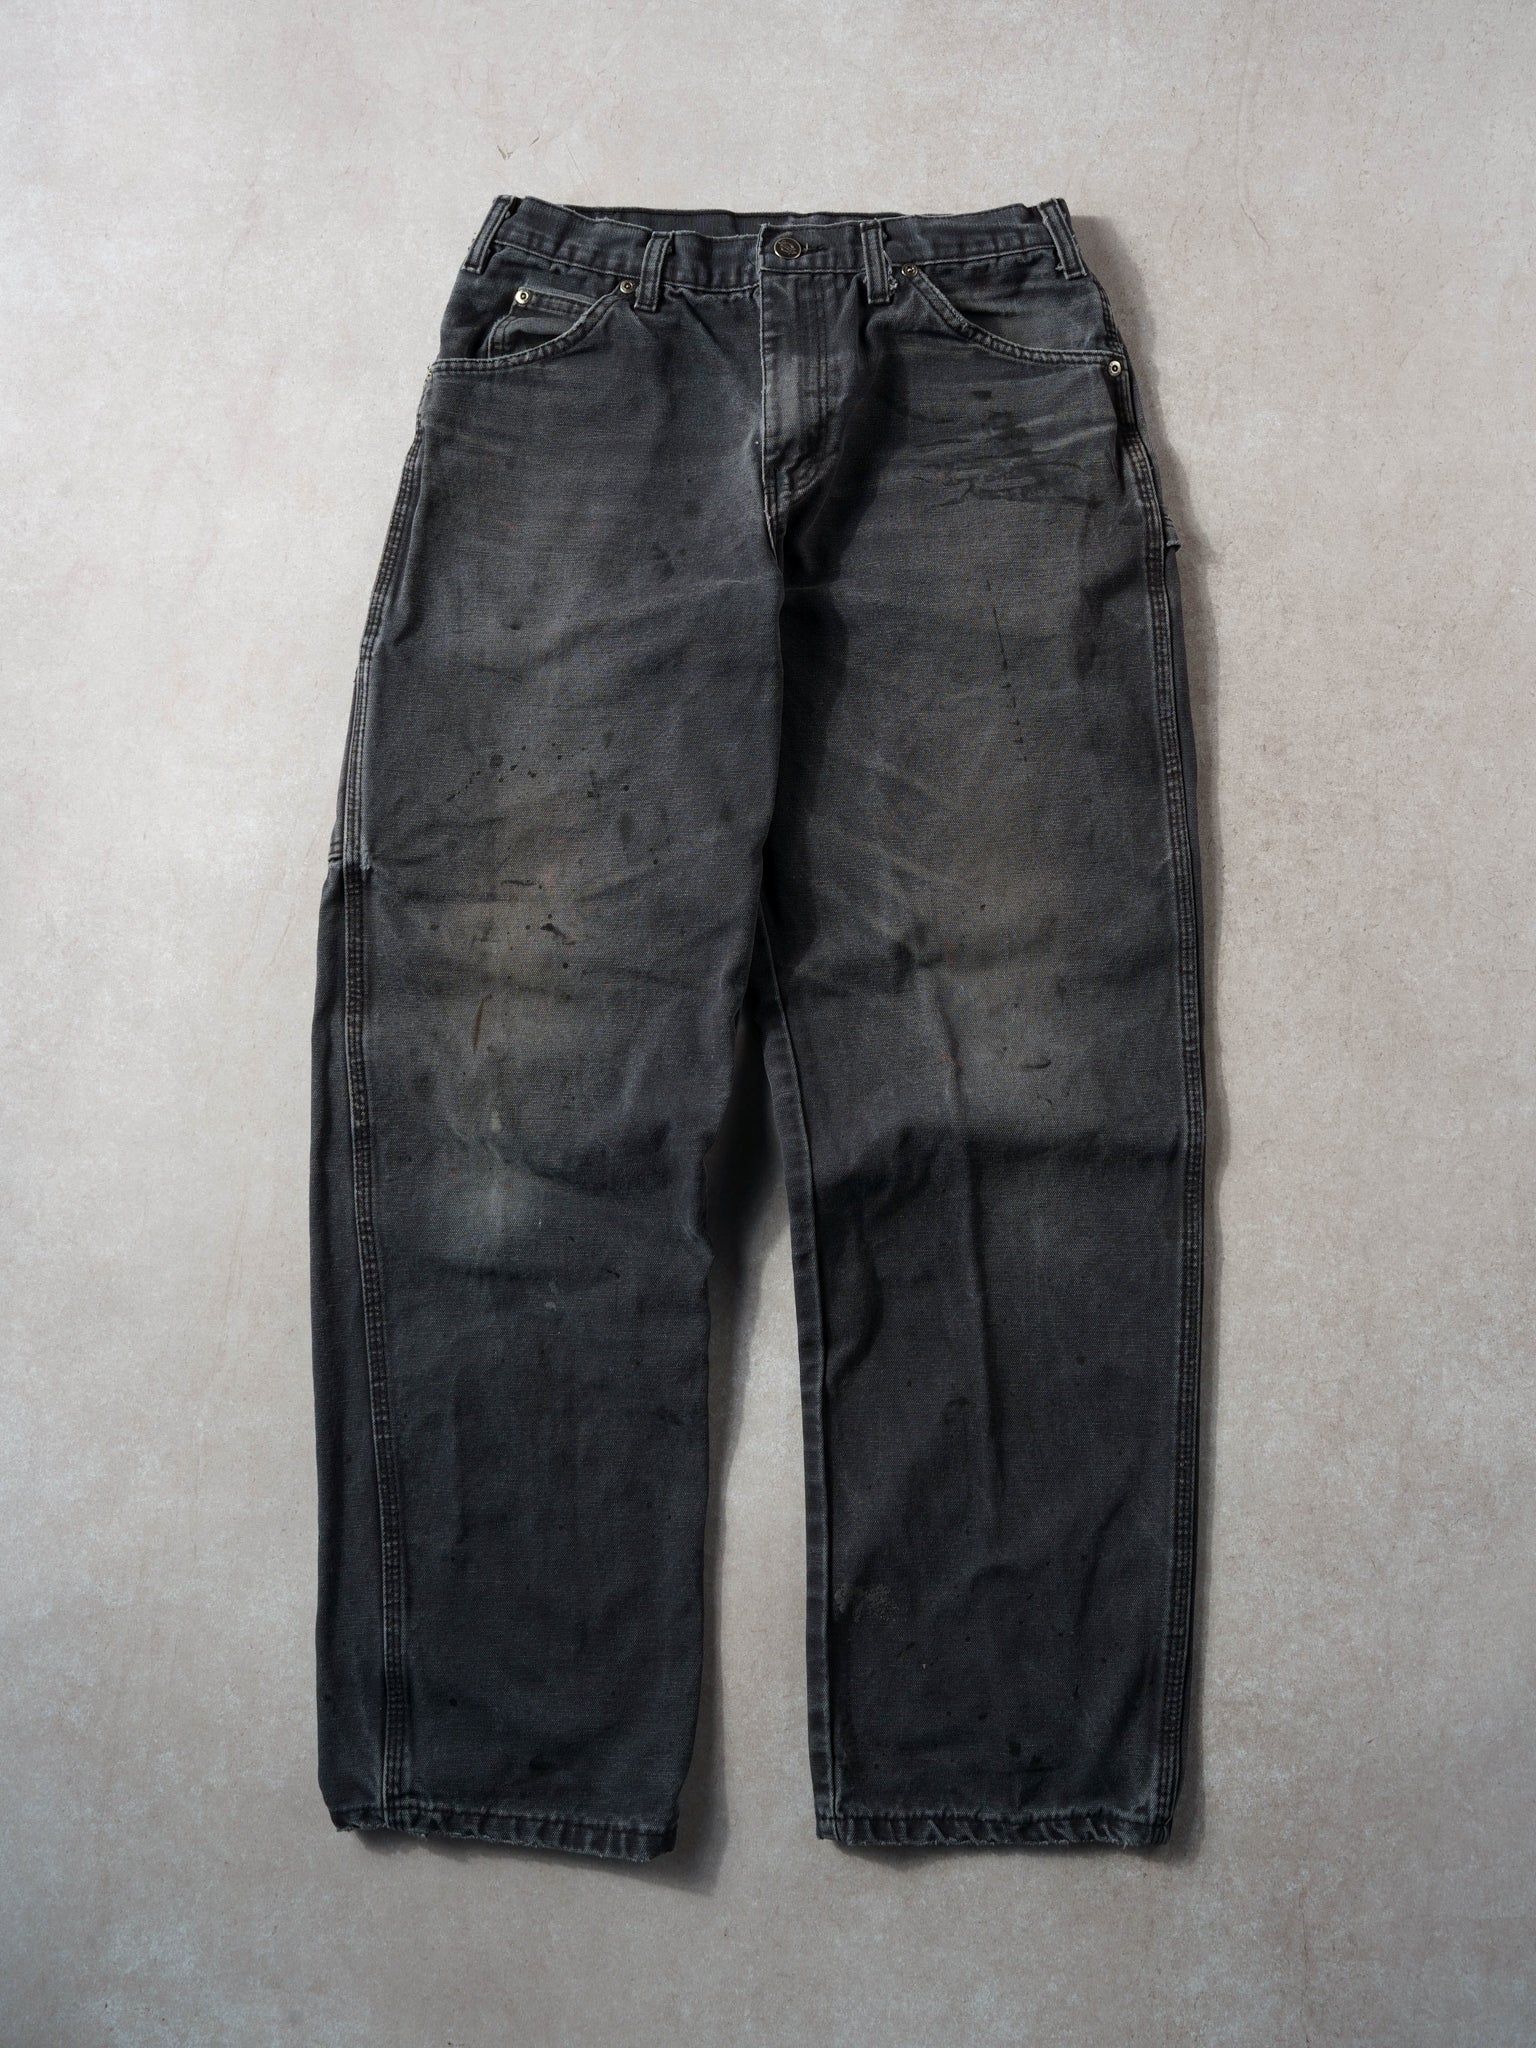 Vintage 90s Washed Black Dickies Carpenter Pants (30x30)